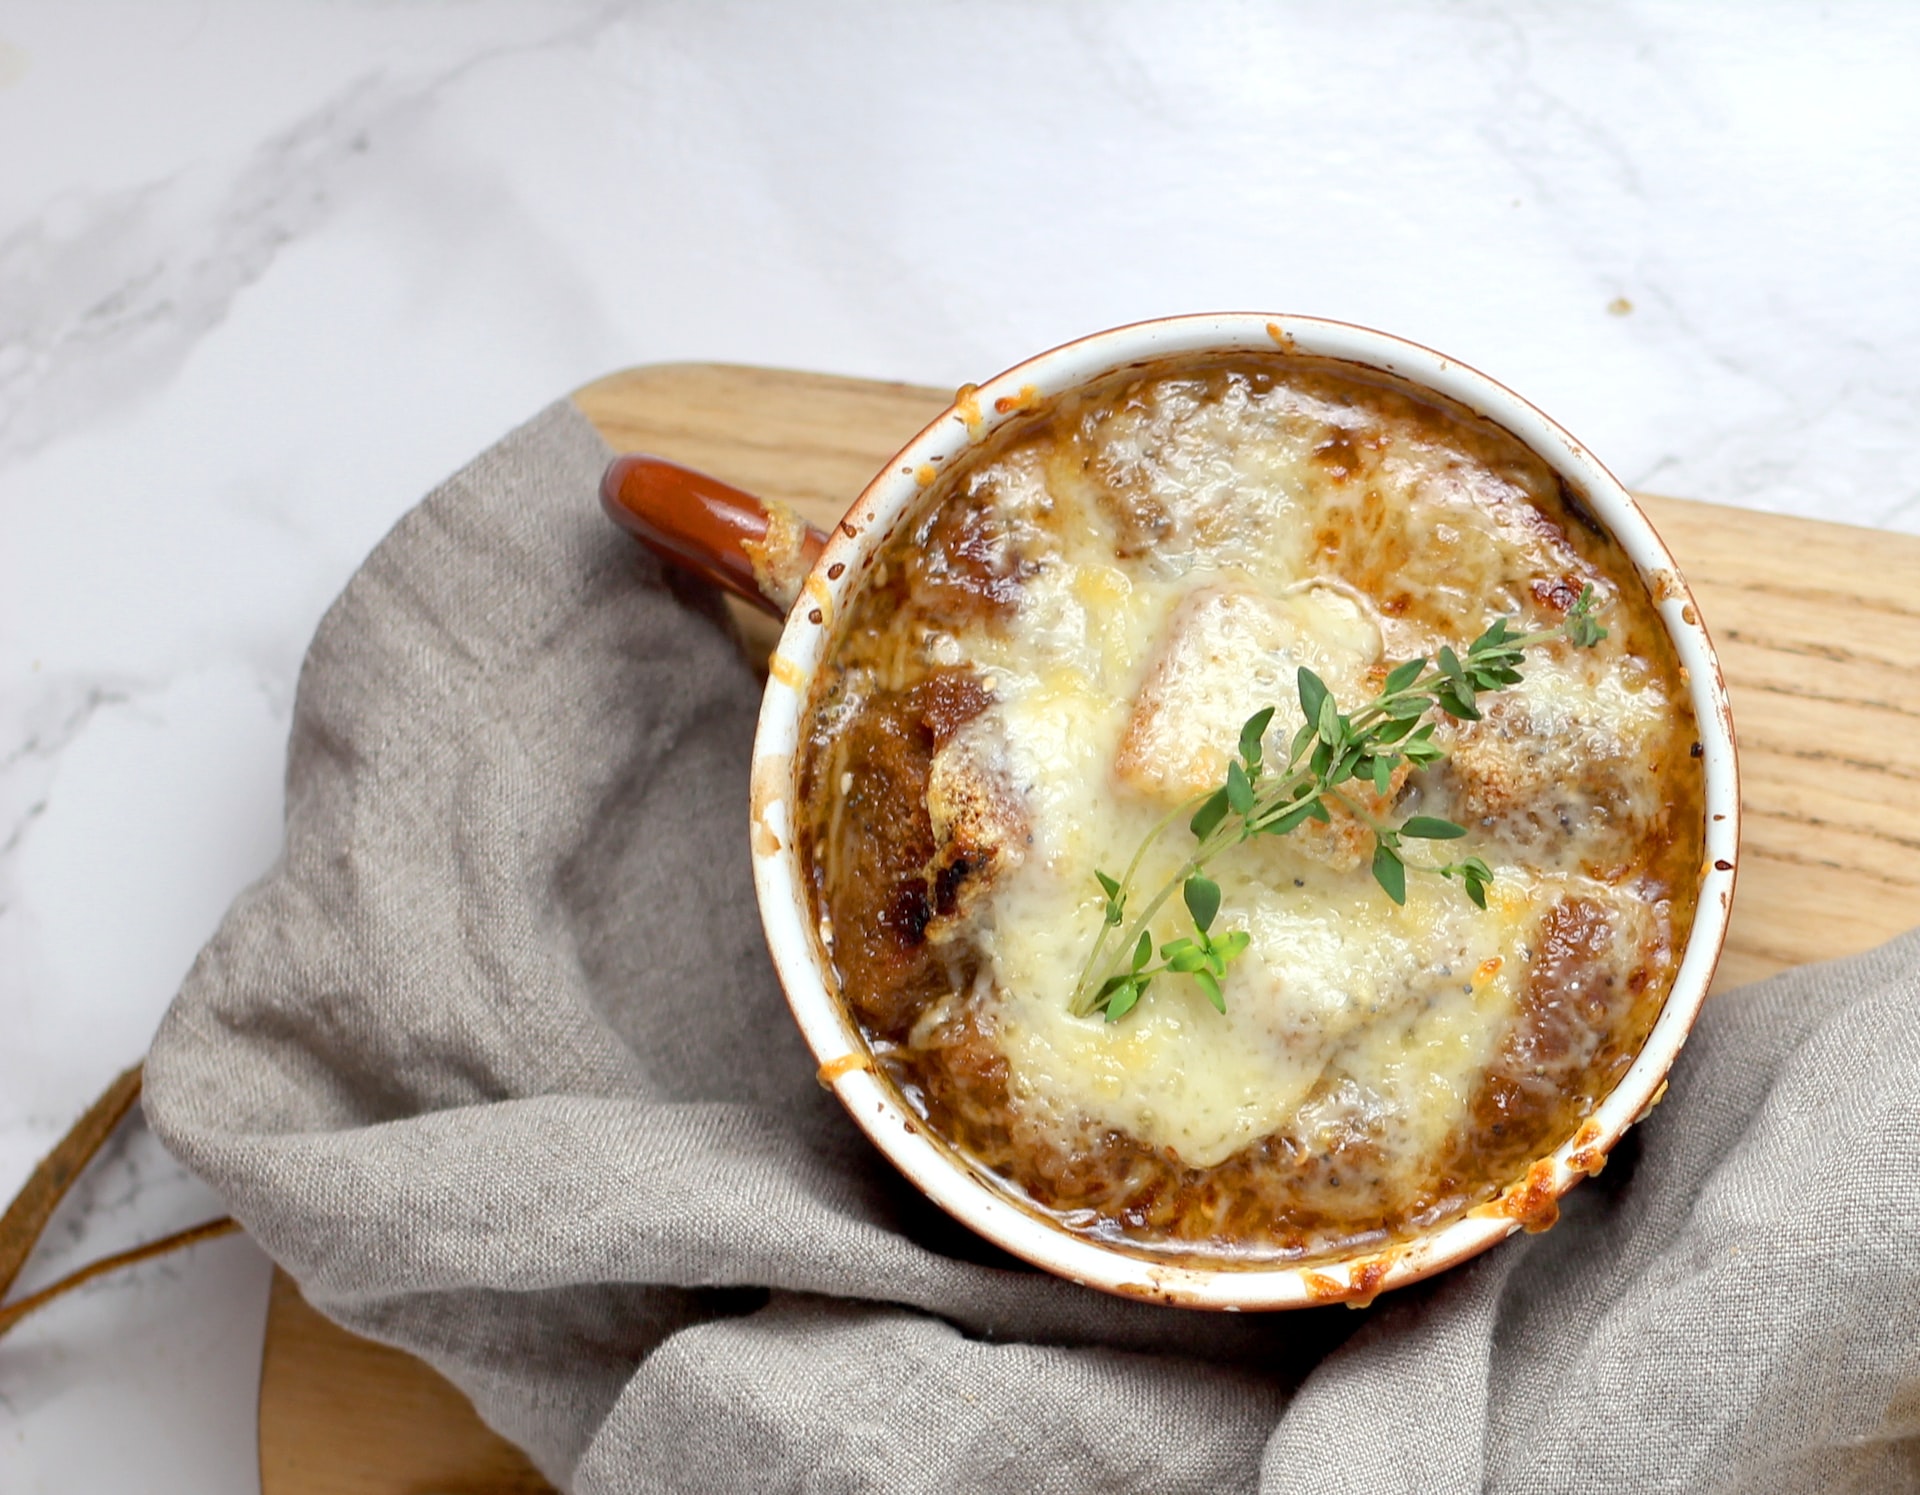 Vegan French Onion Stew Recipe